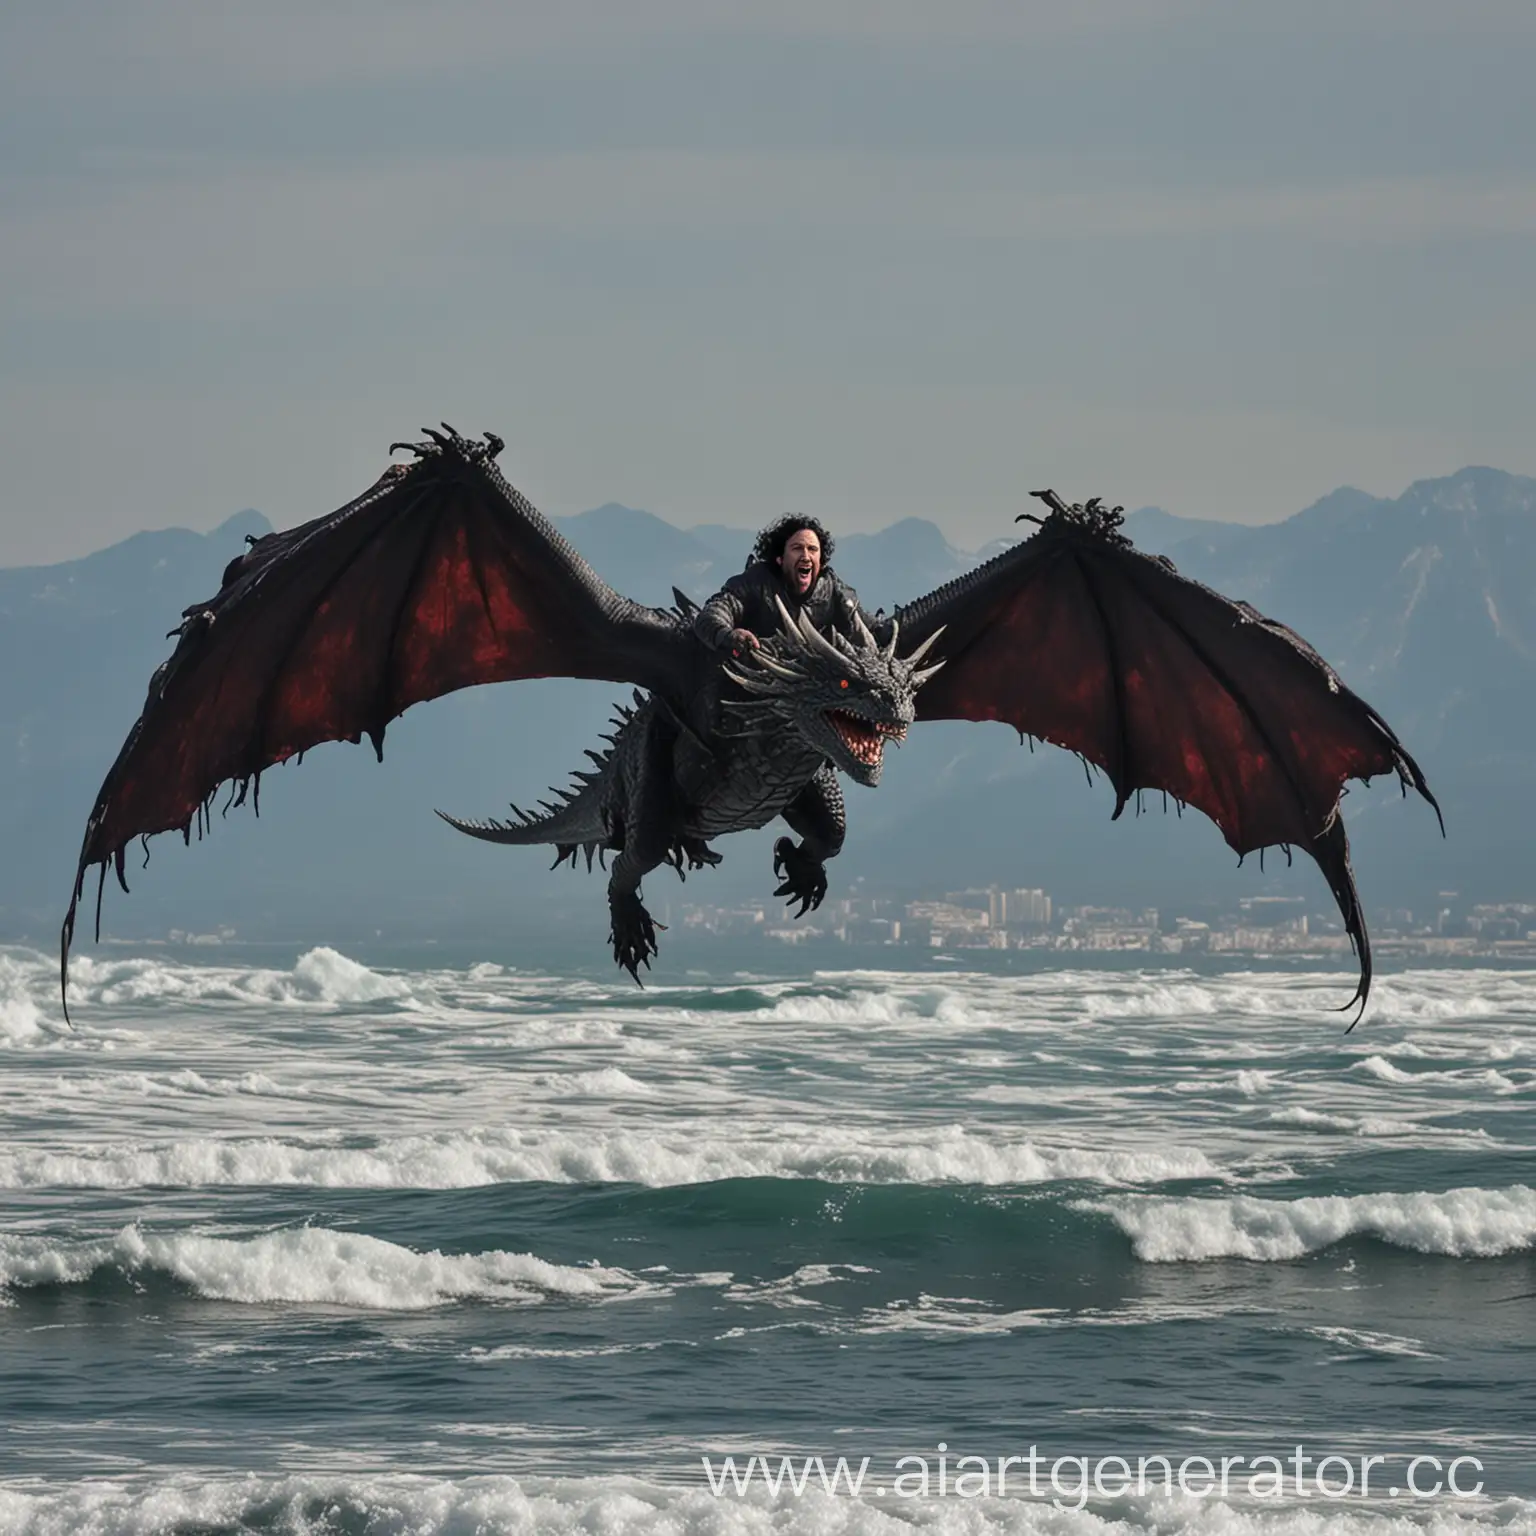 Джон Сноу в Сочи летает на драконе над морем